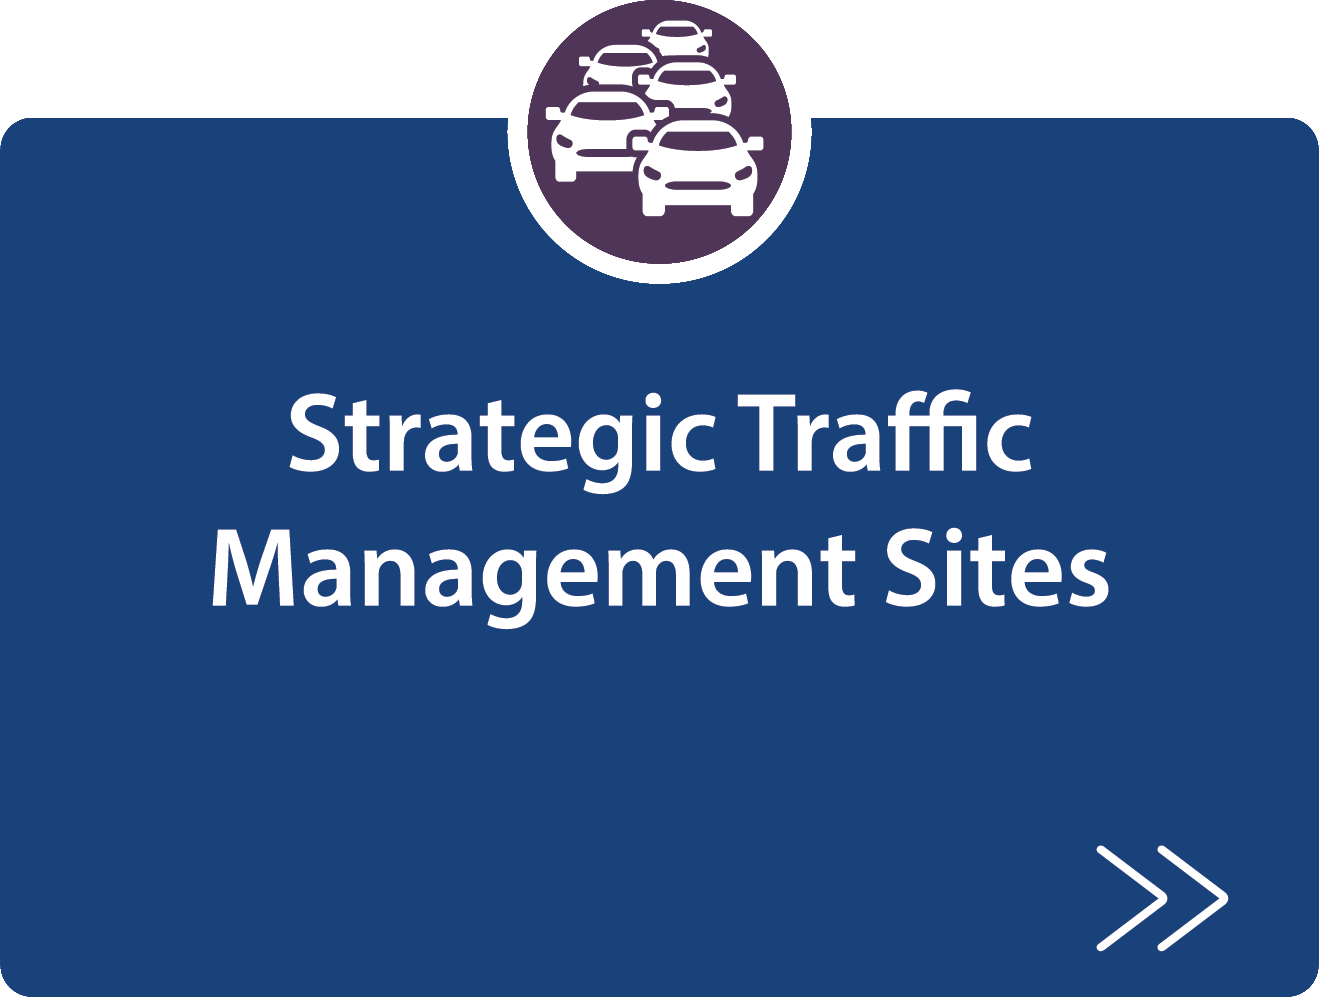 Strategic Traffic Management Sites strategy description